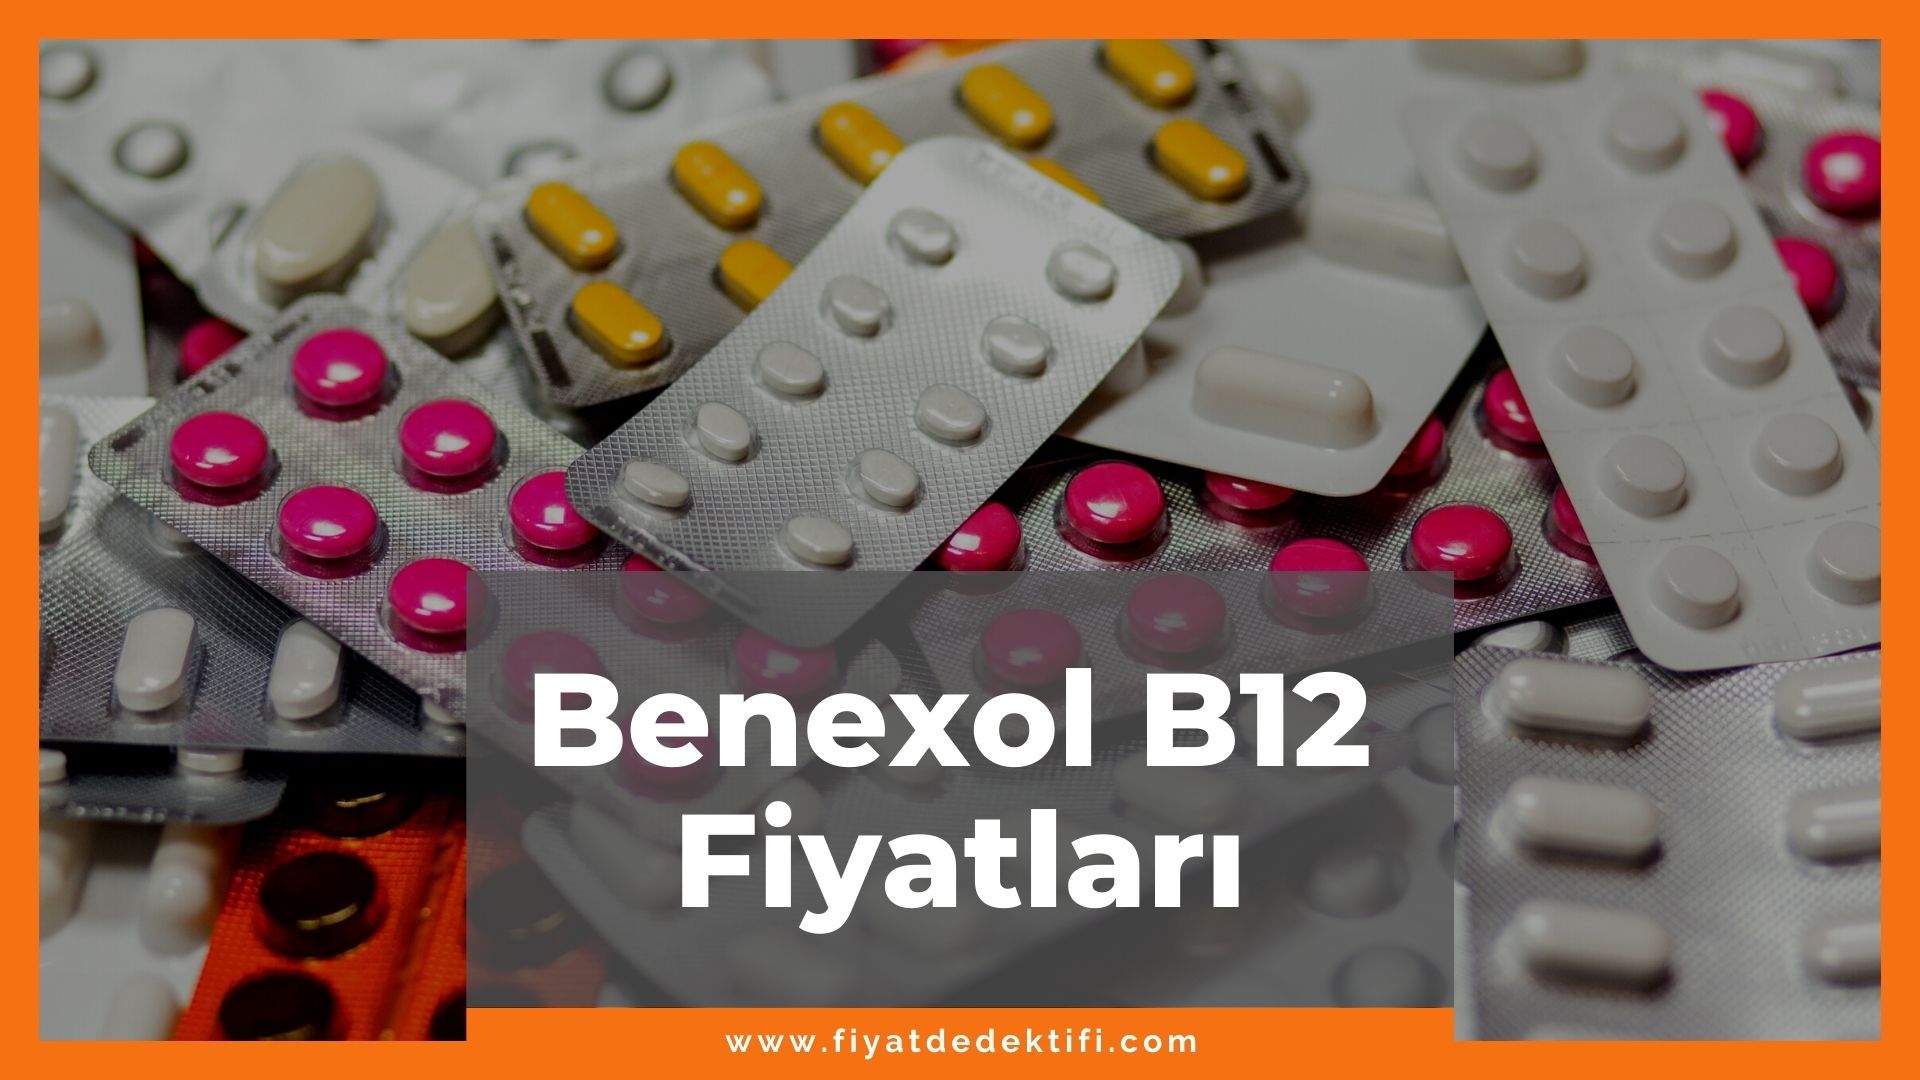 Benexol Fiyat 2021, Benoxol B12 Fiyat, benexol b12 vitamini fiyatları